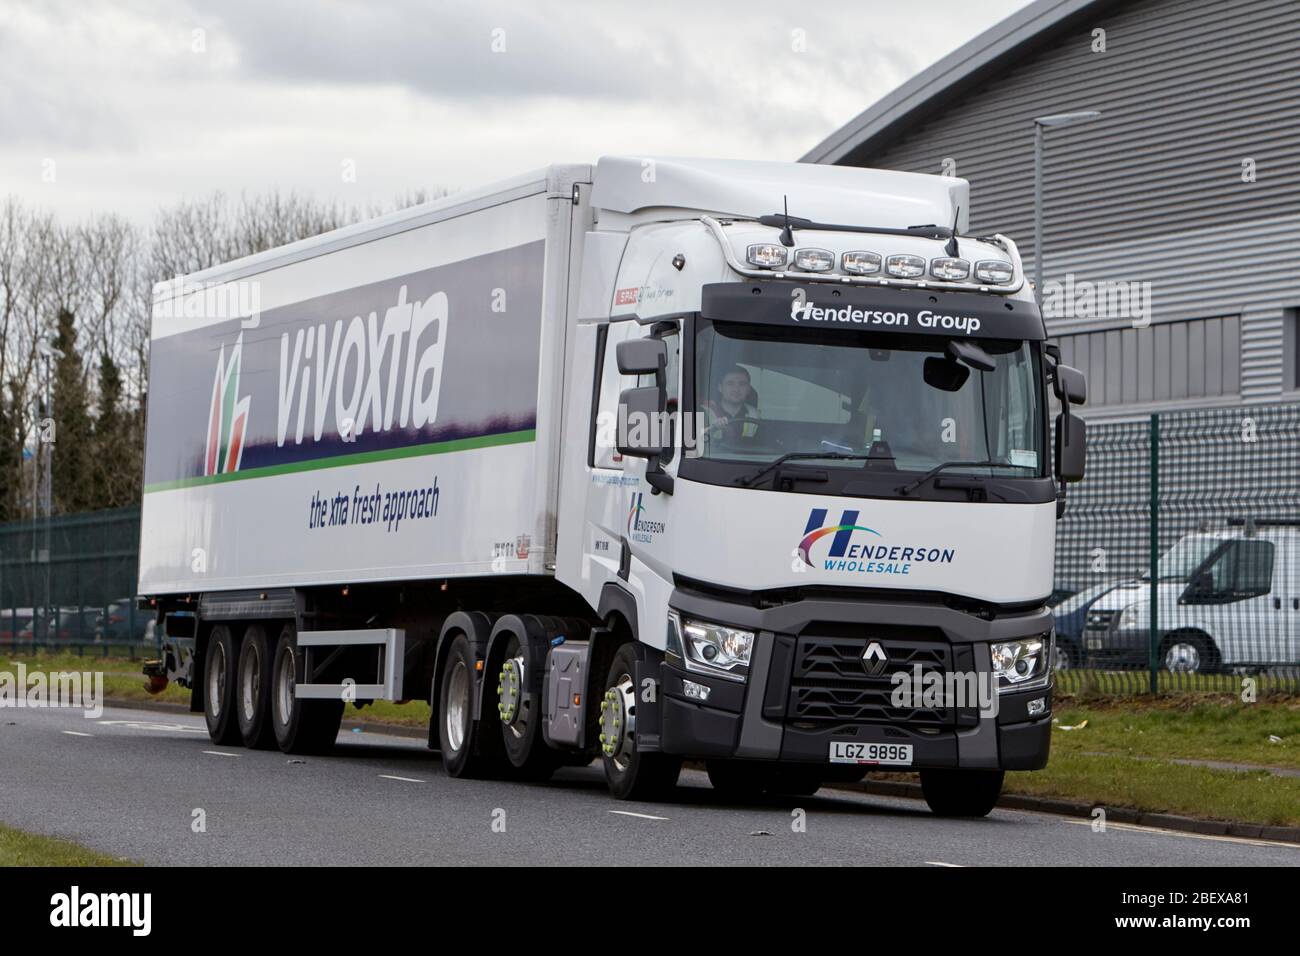 Lokale Lebensmitteltransporte Logistik gekühlte Lebensmittel Verteilung für vivo extra hendersons Newtownabbey Nordirland UK Stockfoto